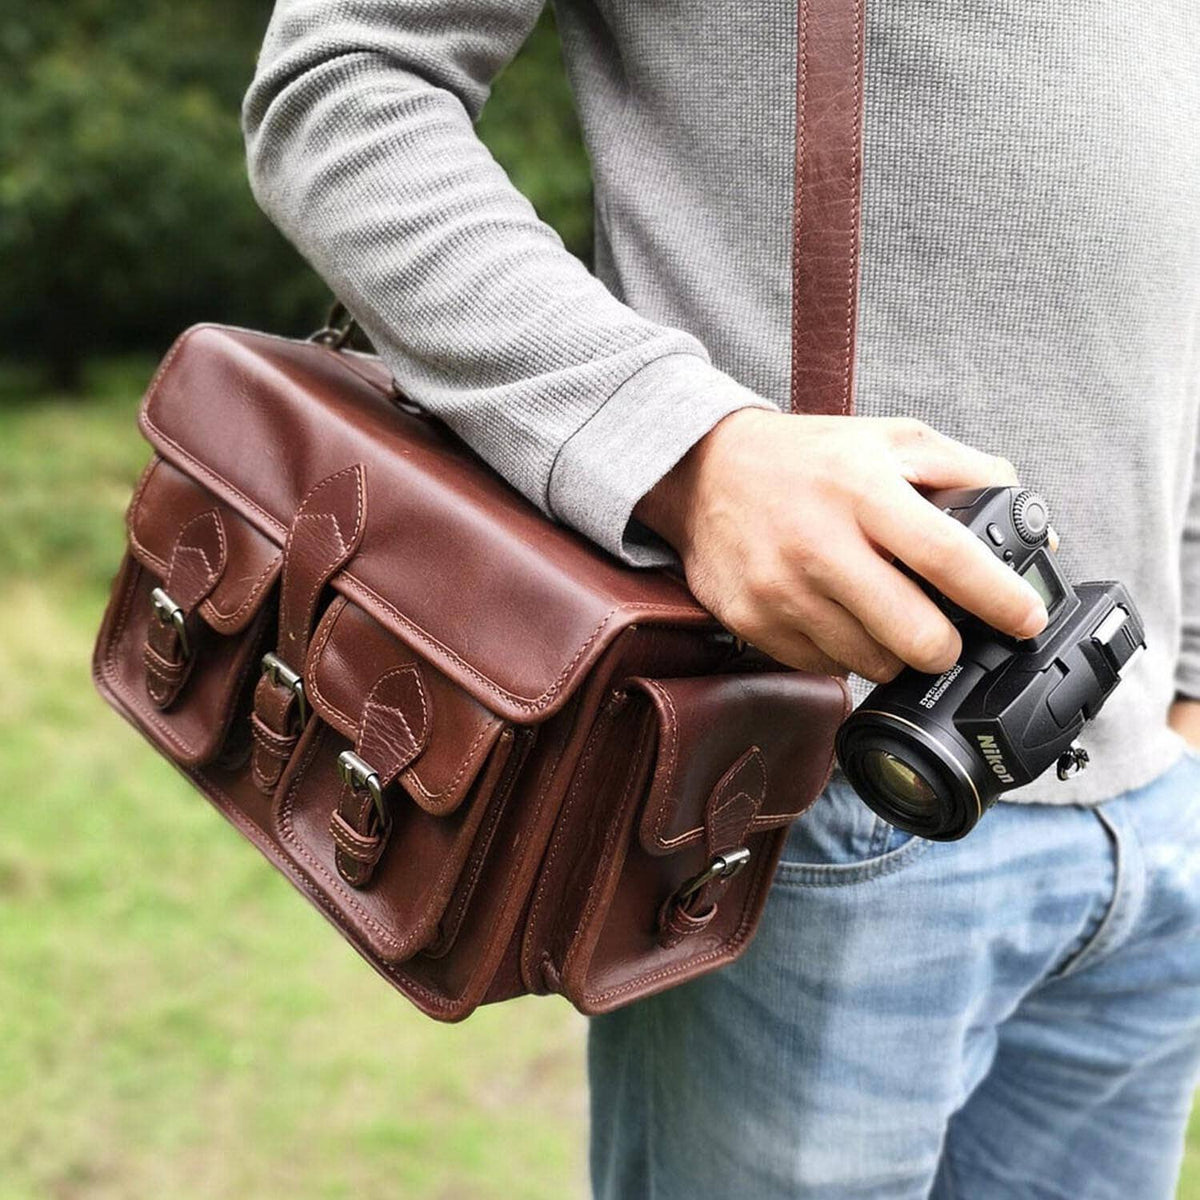 Buy Leather Camera Bags  DSLR Camera Bag Online At Best Price